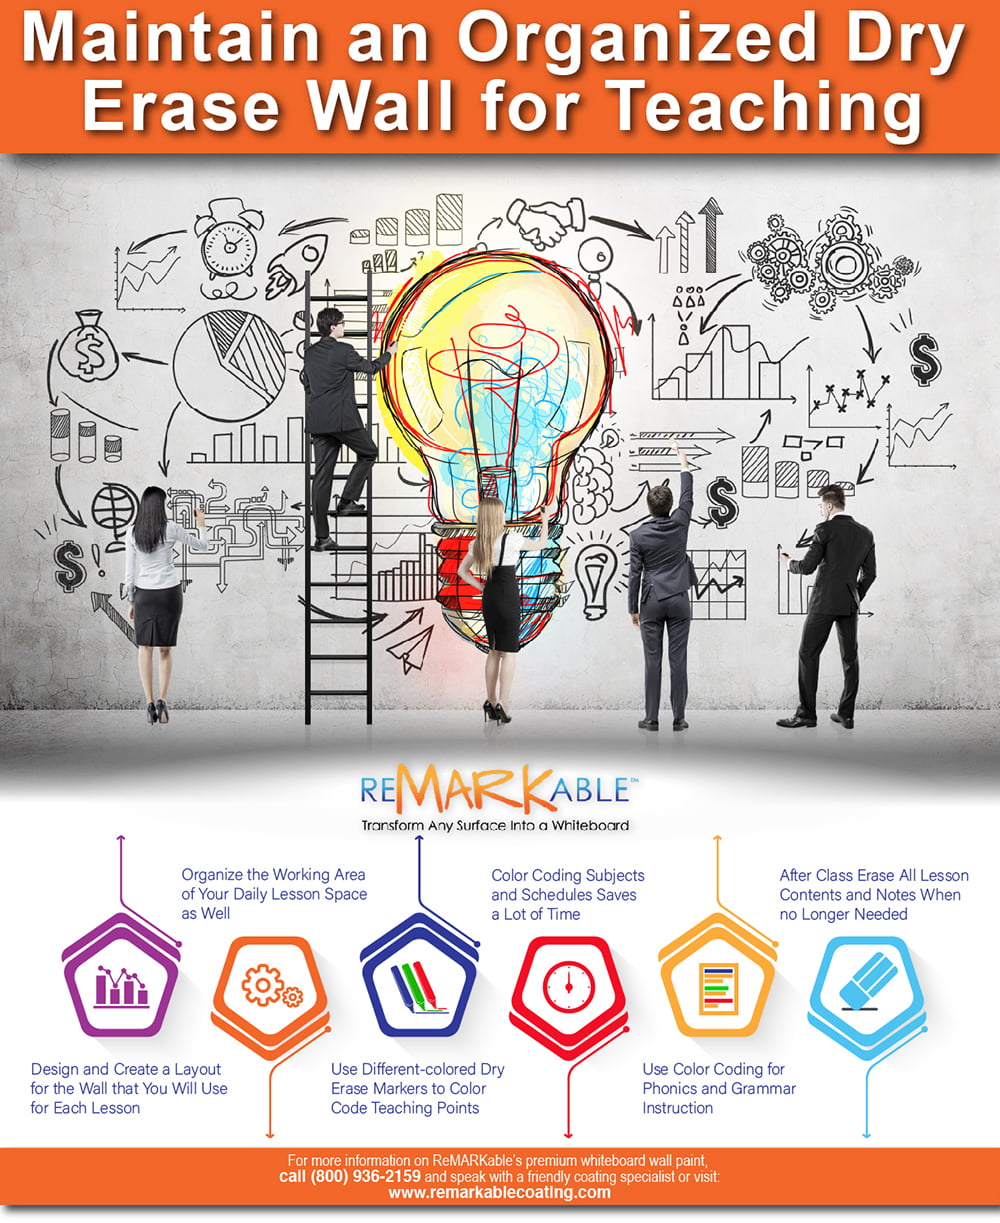 Maintain an Organized Dry Erase Wall for Teaching